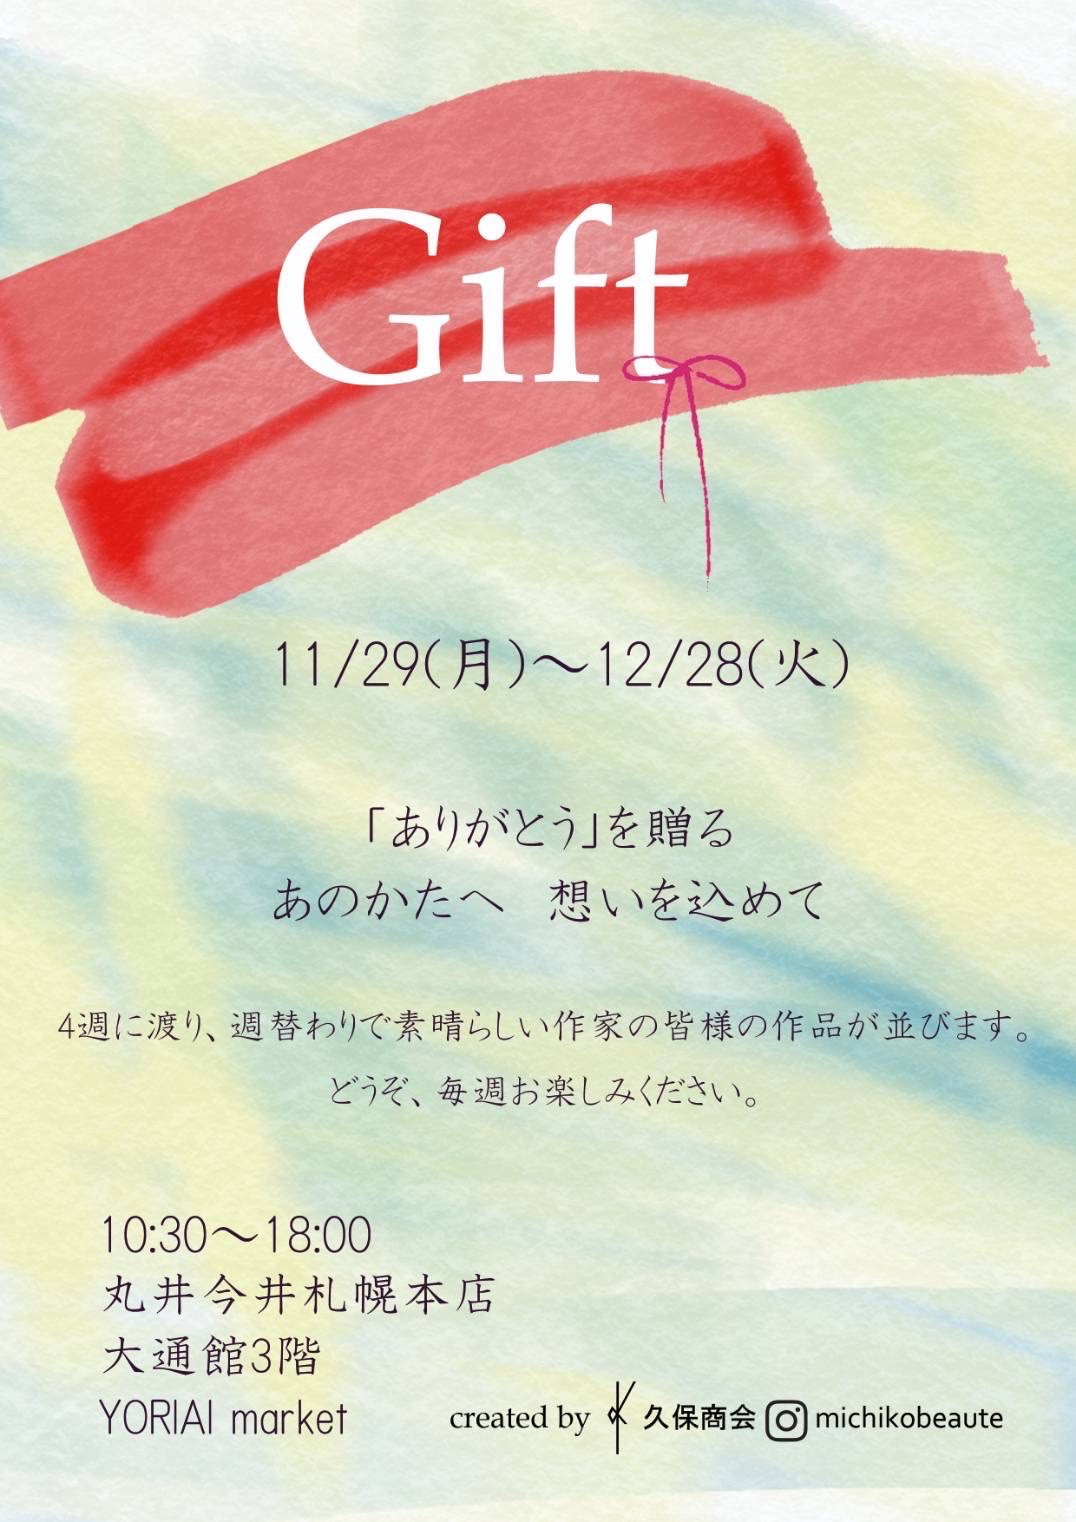 『gift』＠丸井今井札幌本店YORIAImarket 出店のお知らせ